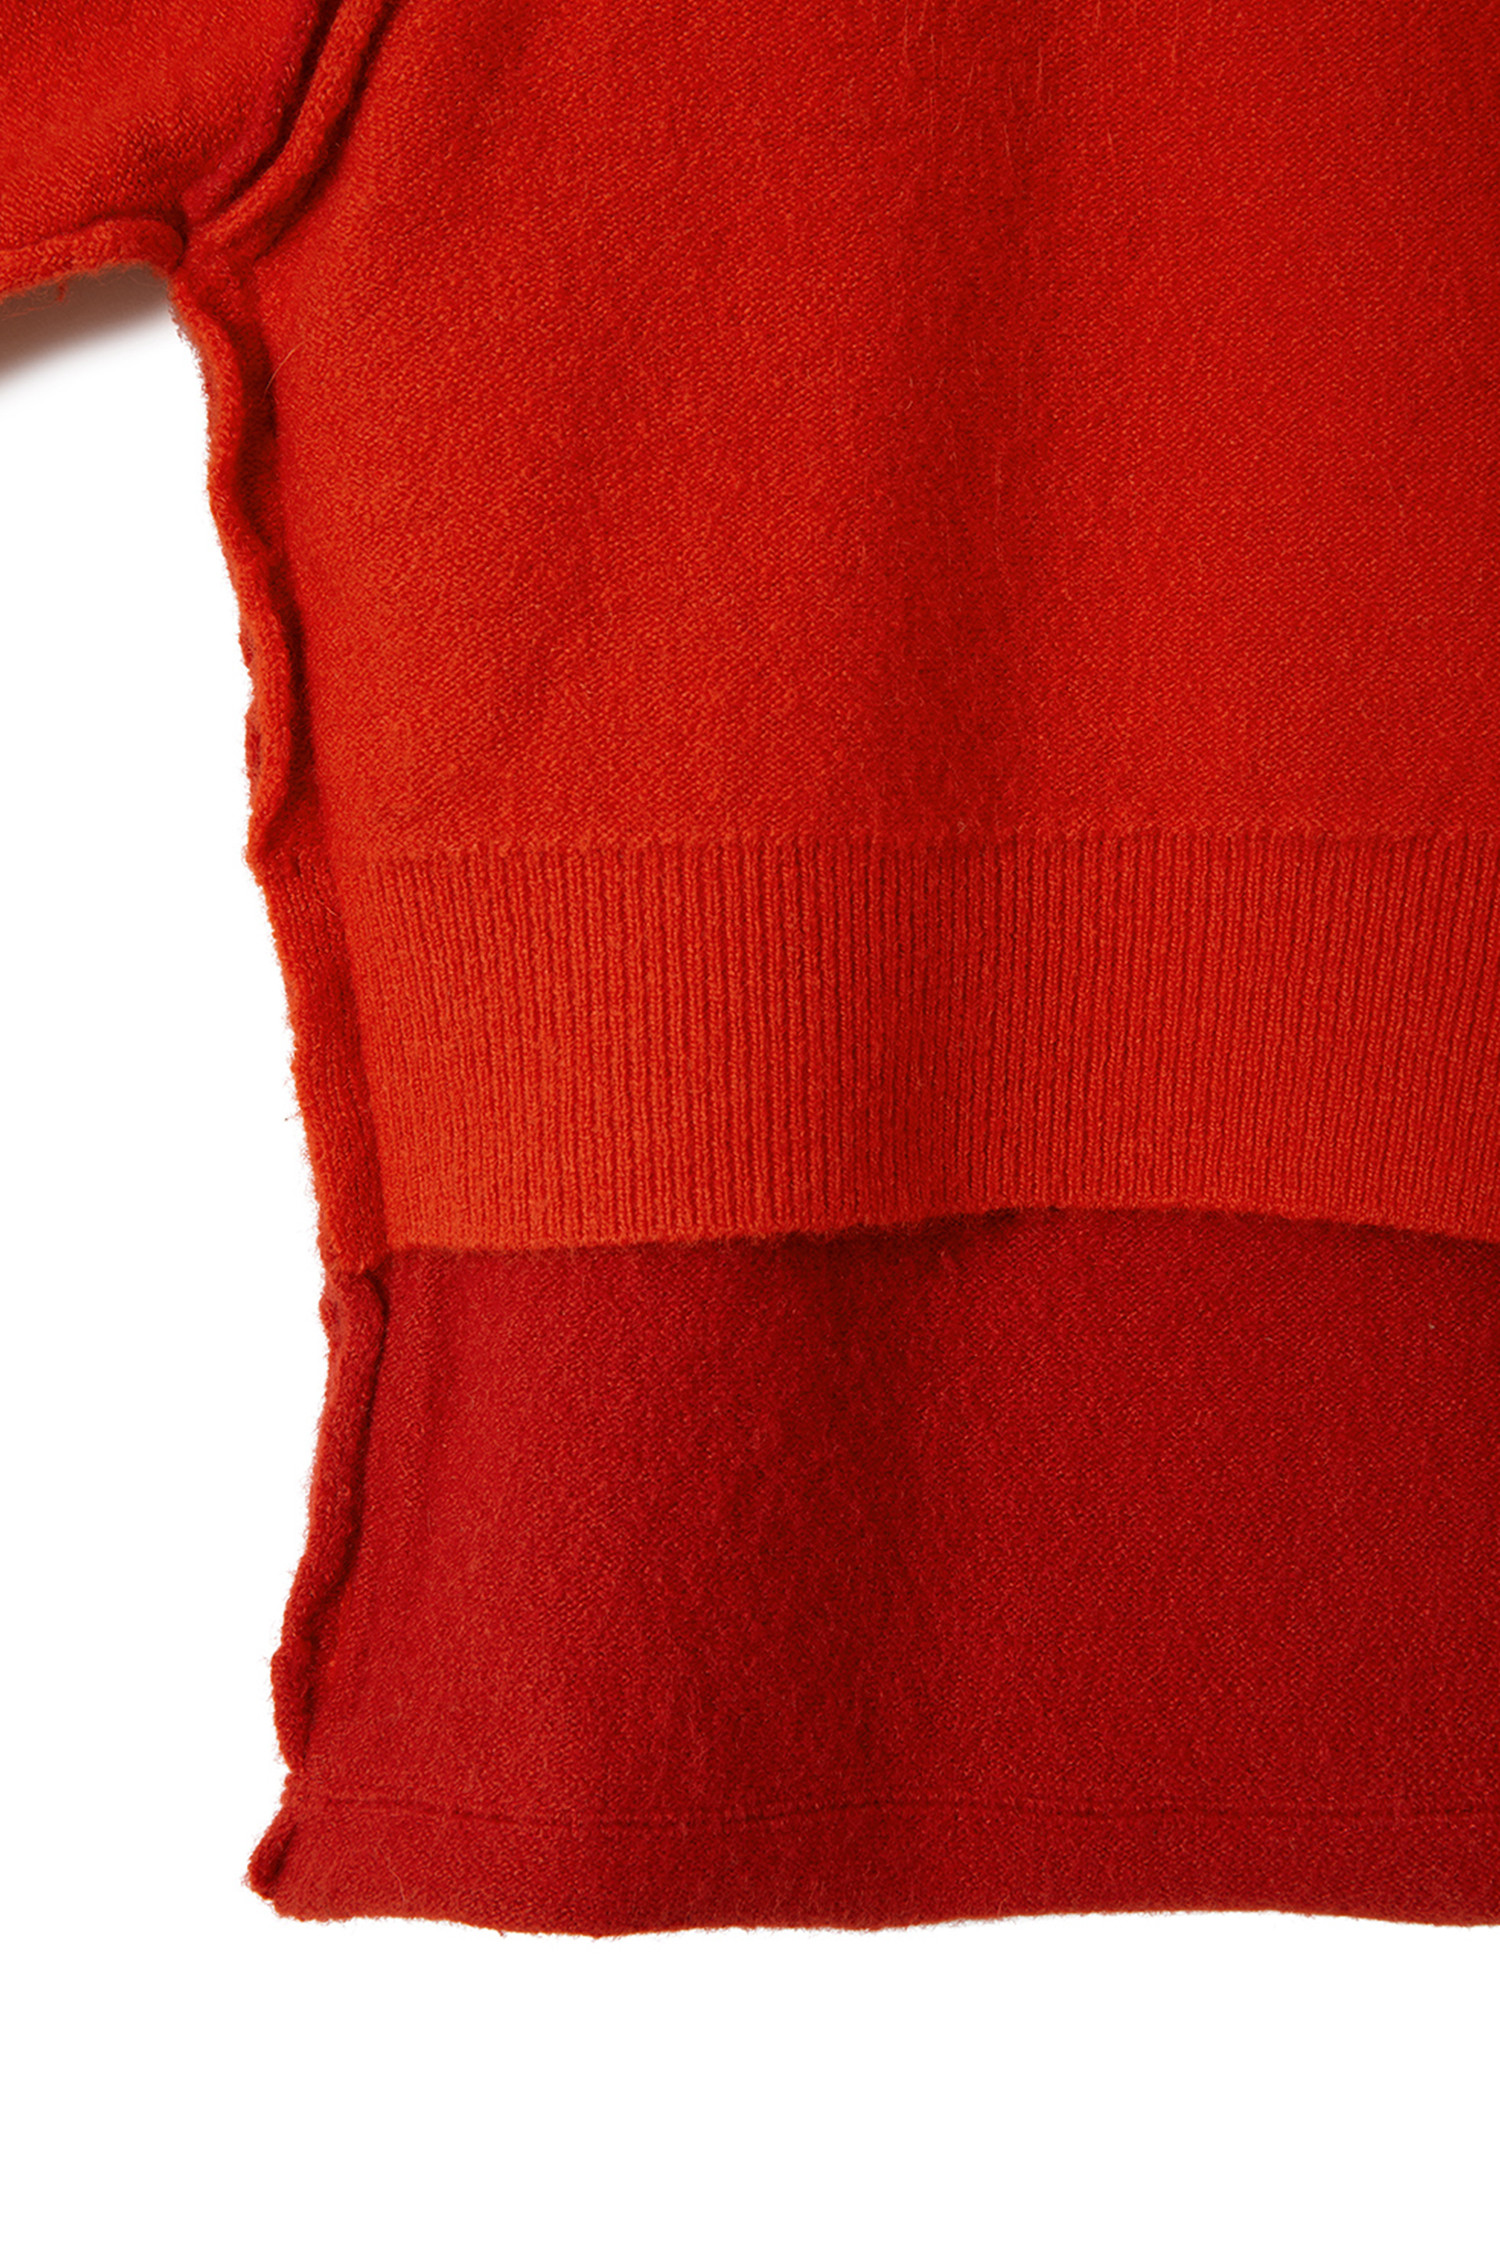 PERVERZE] Stitching Double Cardigan - Red_PERVERZE